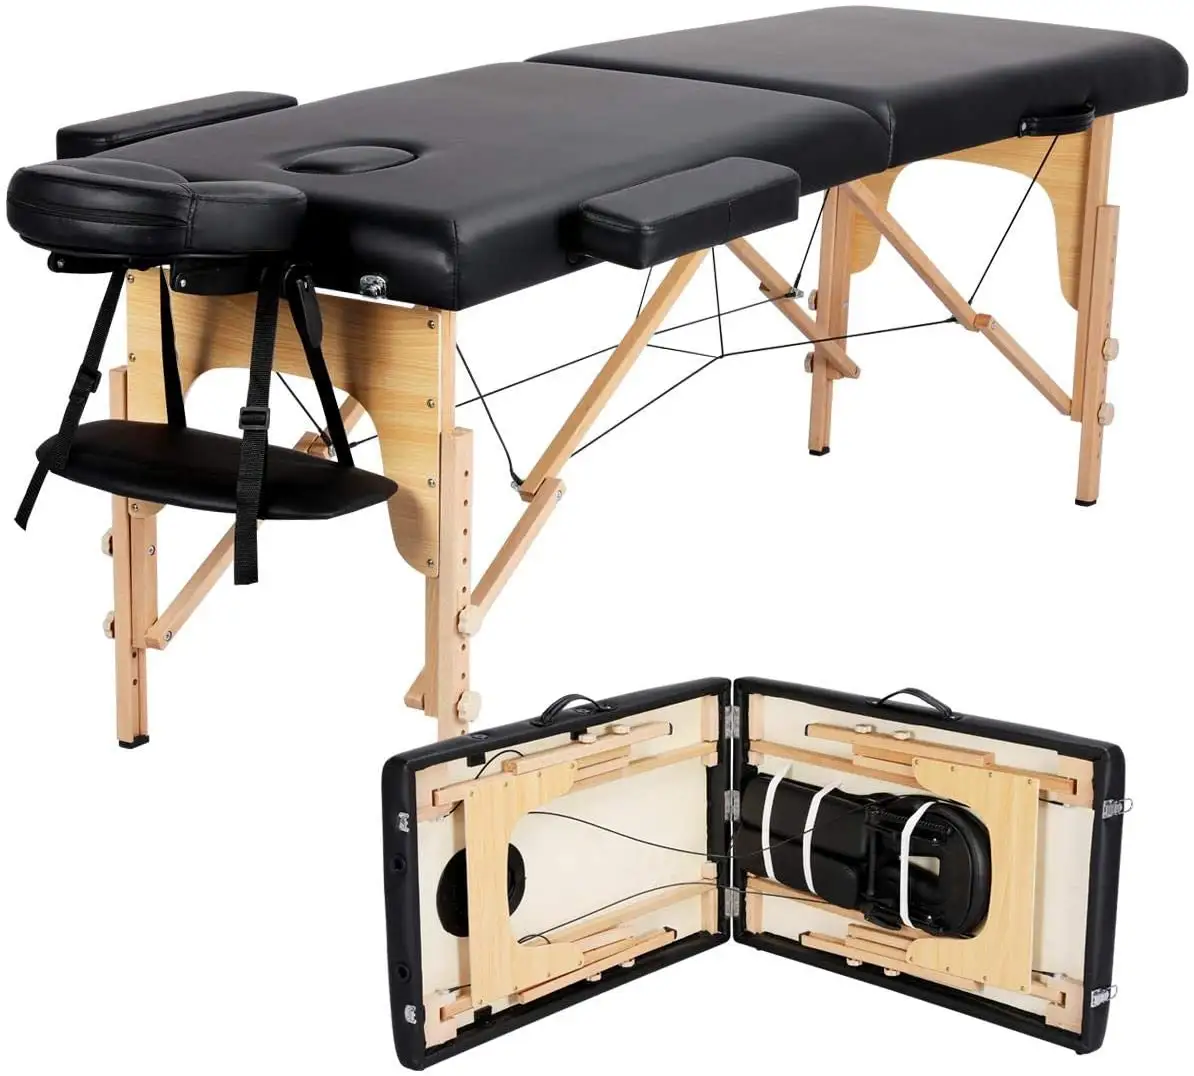 Sukar-mesa de masaje plegable, mesa de masaje portátil